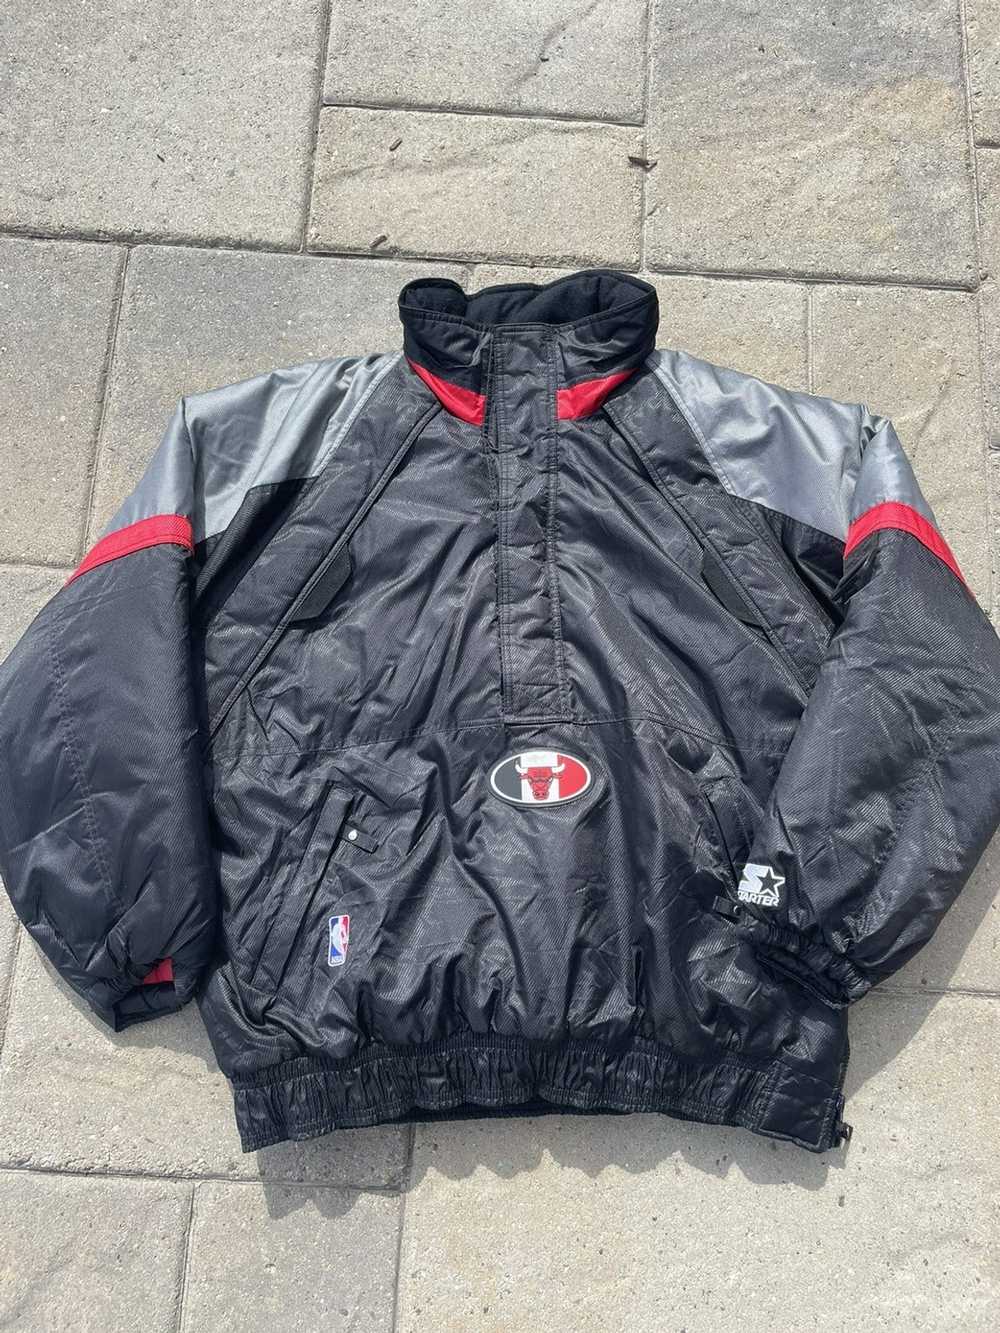 TH Vintage Items - Vintage NBA Starter jackets in store, link in bio.  🏀🔥✌🏼 . . . #vintage #90s #nba #bulls #chicagobulls #jordan #jumpman  #vintageclothing #outerwear #sports #sportswear #basketball #bball  #streetwe